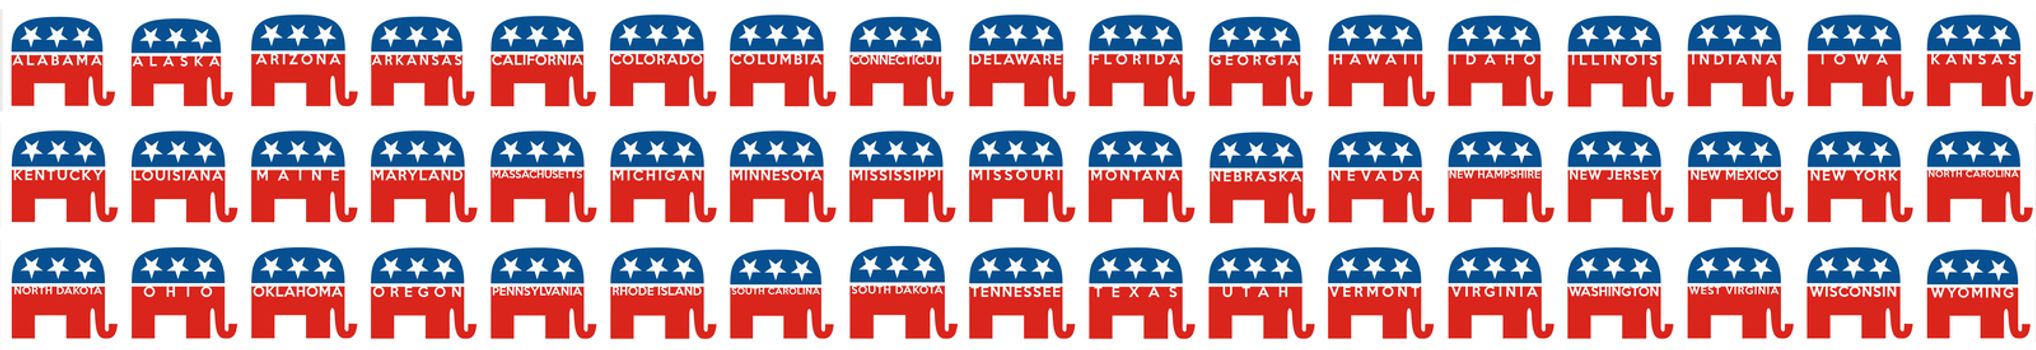 very big size republicans party elephant symbol